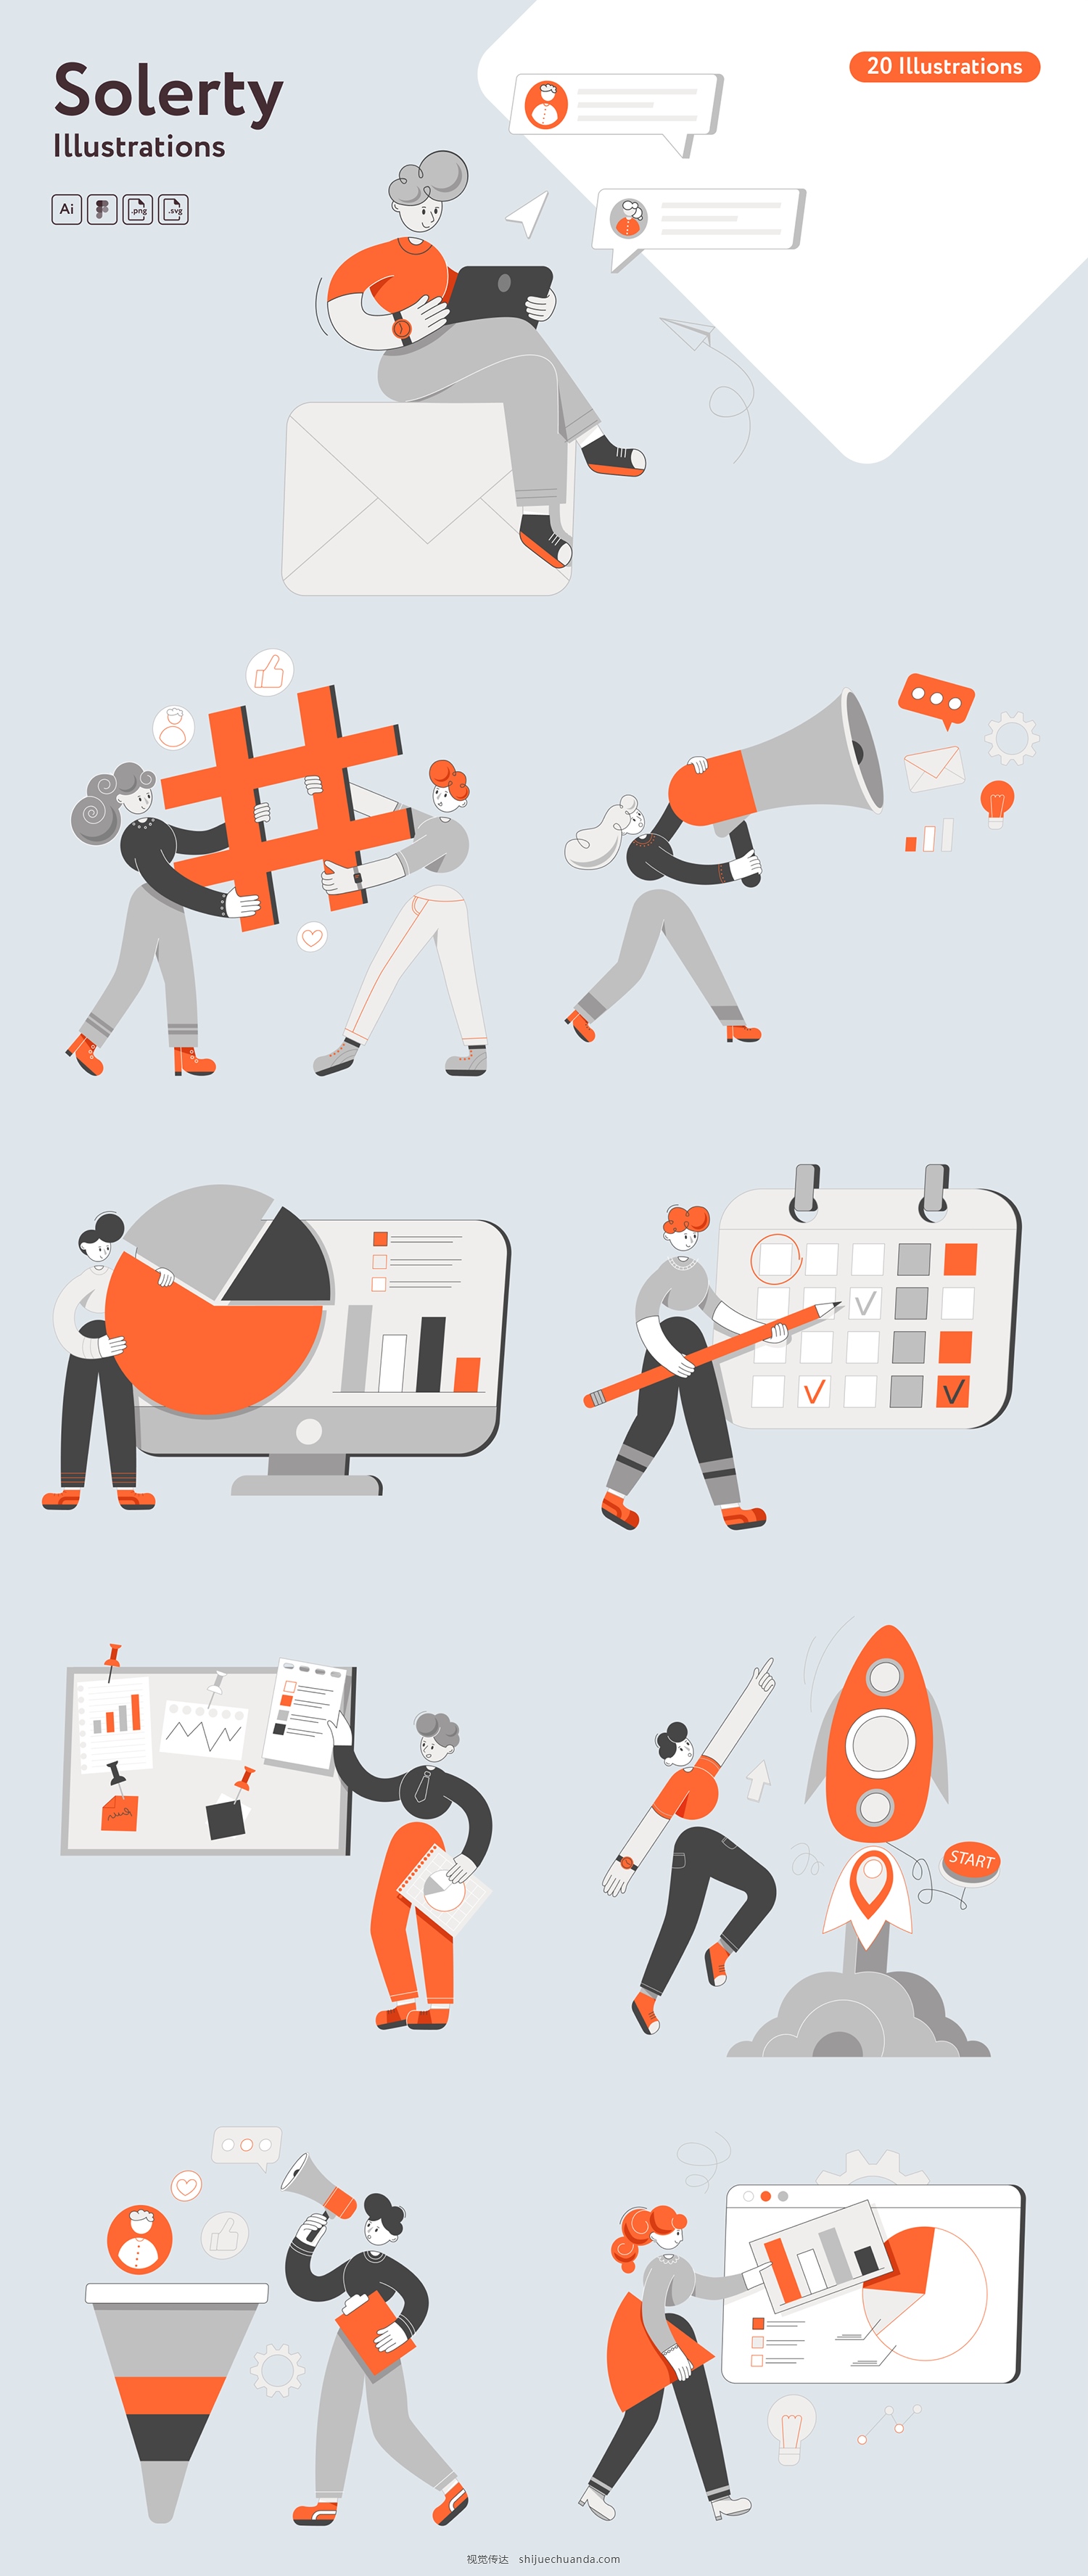 Solerty Marketing Illustrations-1.jpg